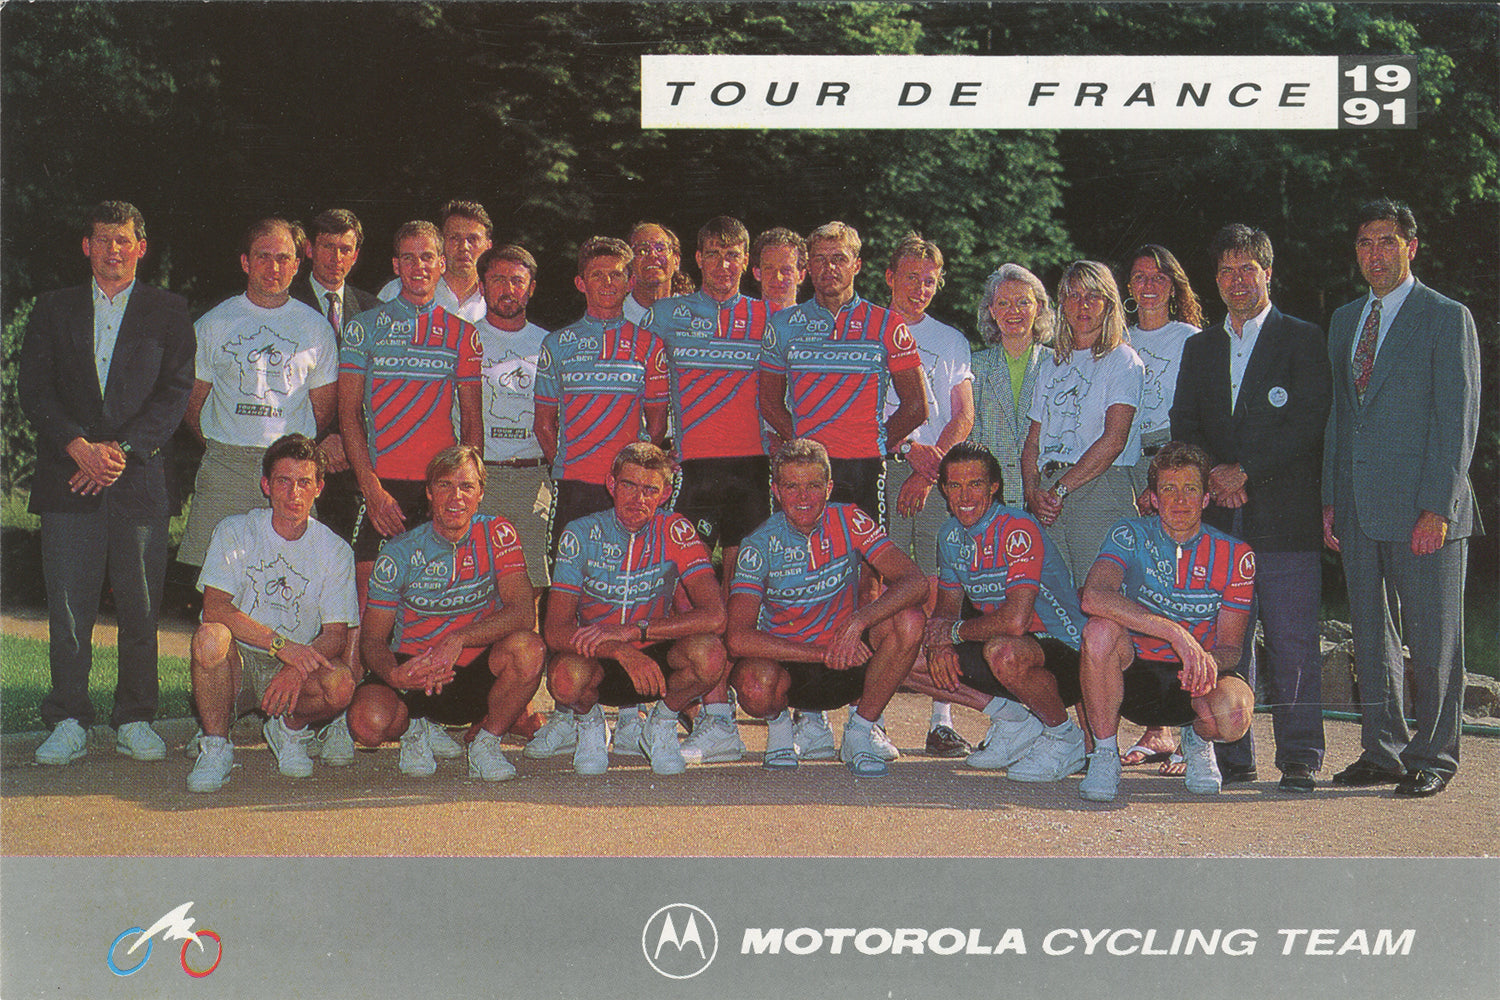 A Motorola cycling team postcard specifically made for the 1991 Tour de France including the team's bike sponsor Eddy Merckx.